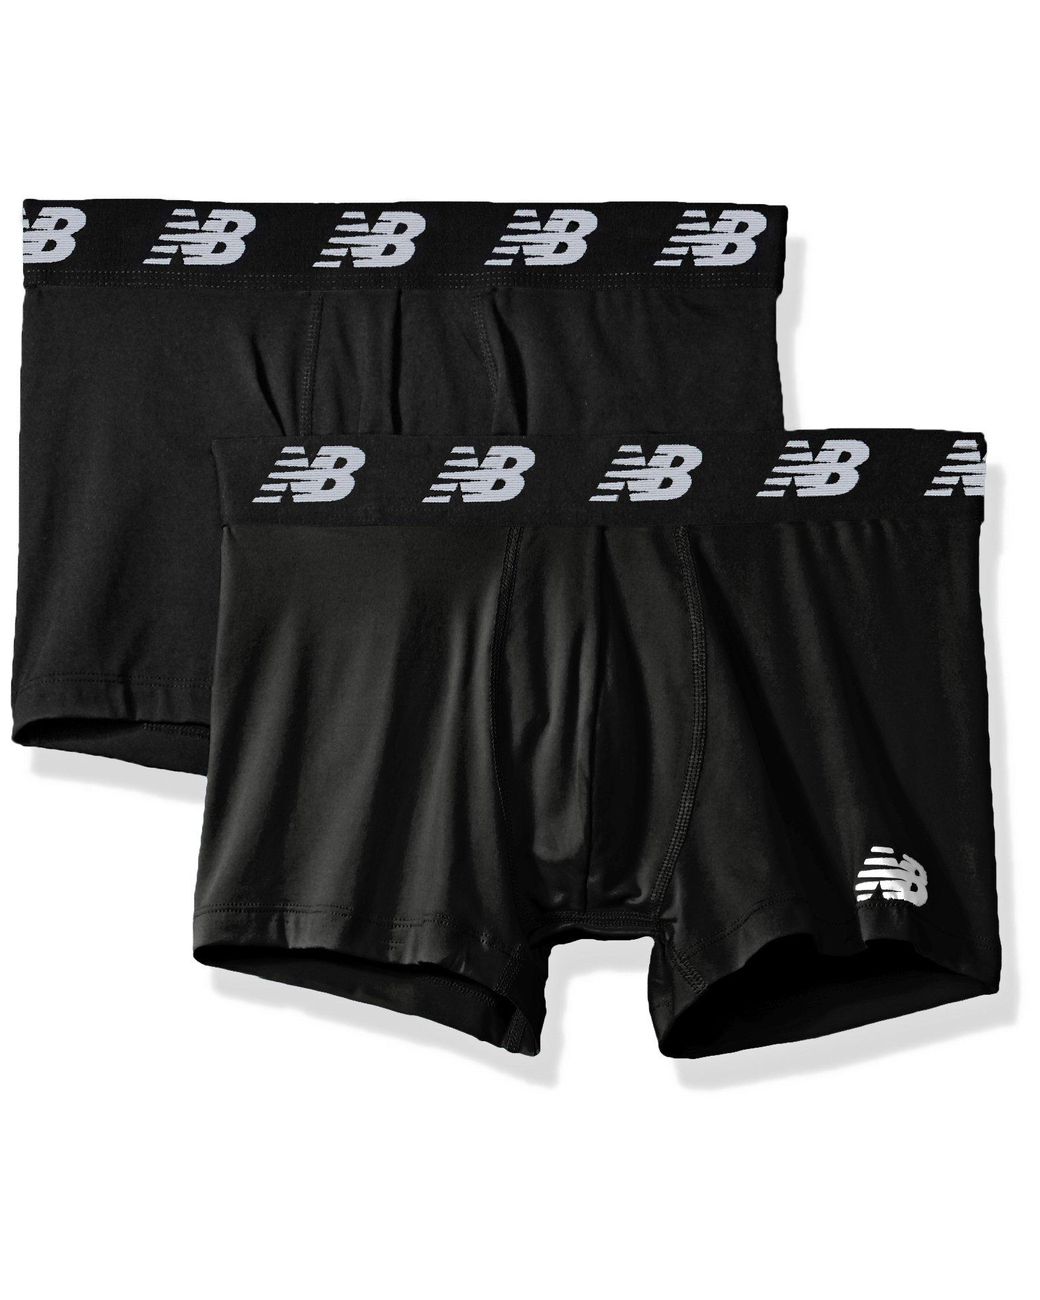 Kreta Of anders vuilnis New Balance Premium Performance 3" Trunk Underwear in Black for Men | Lyst